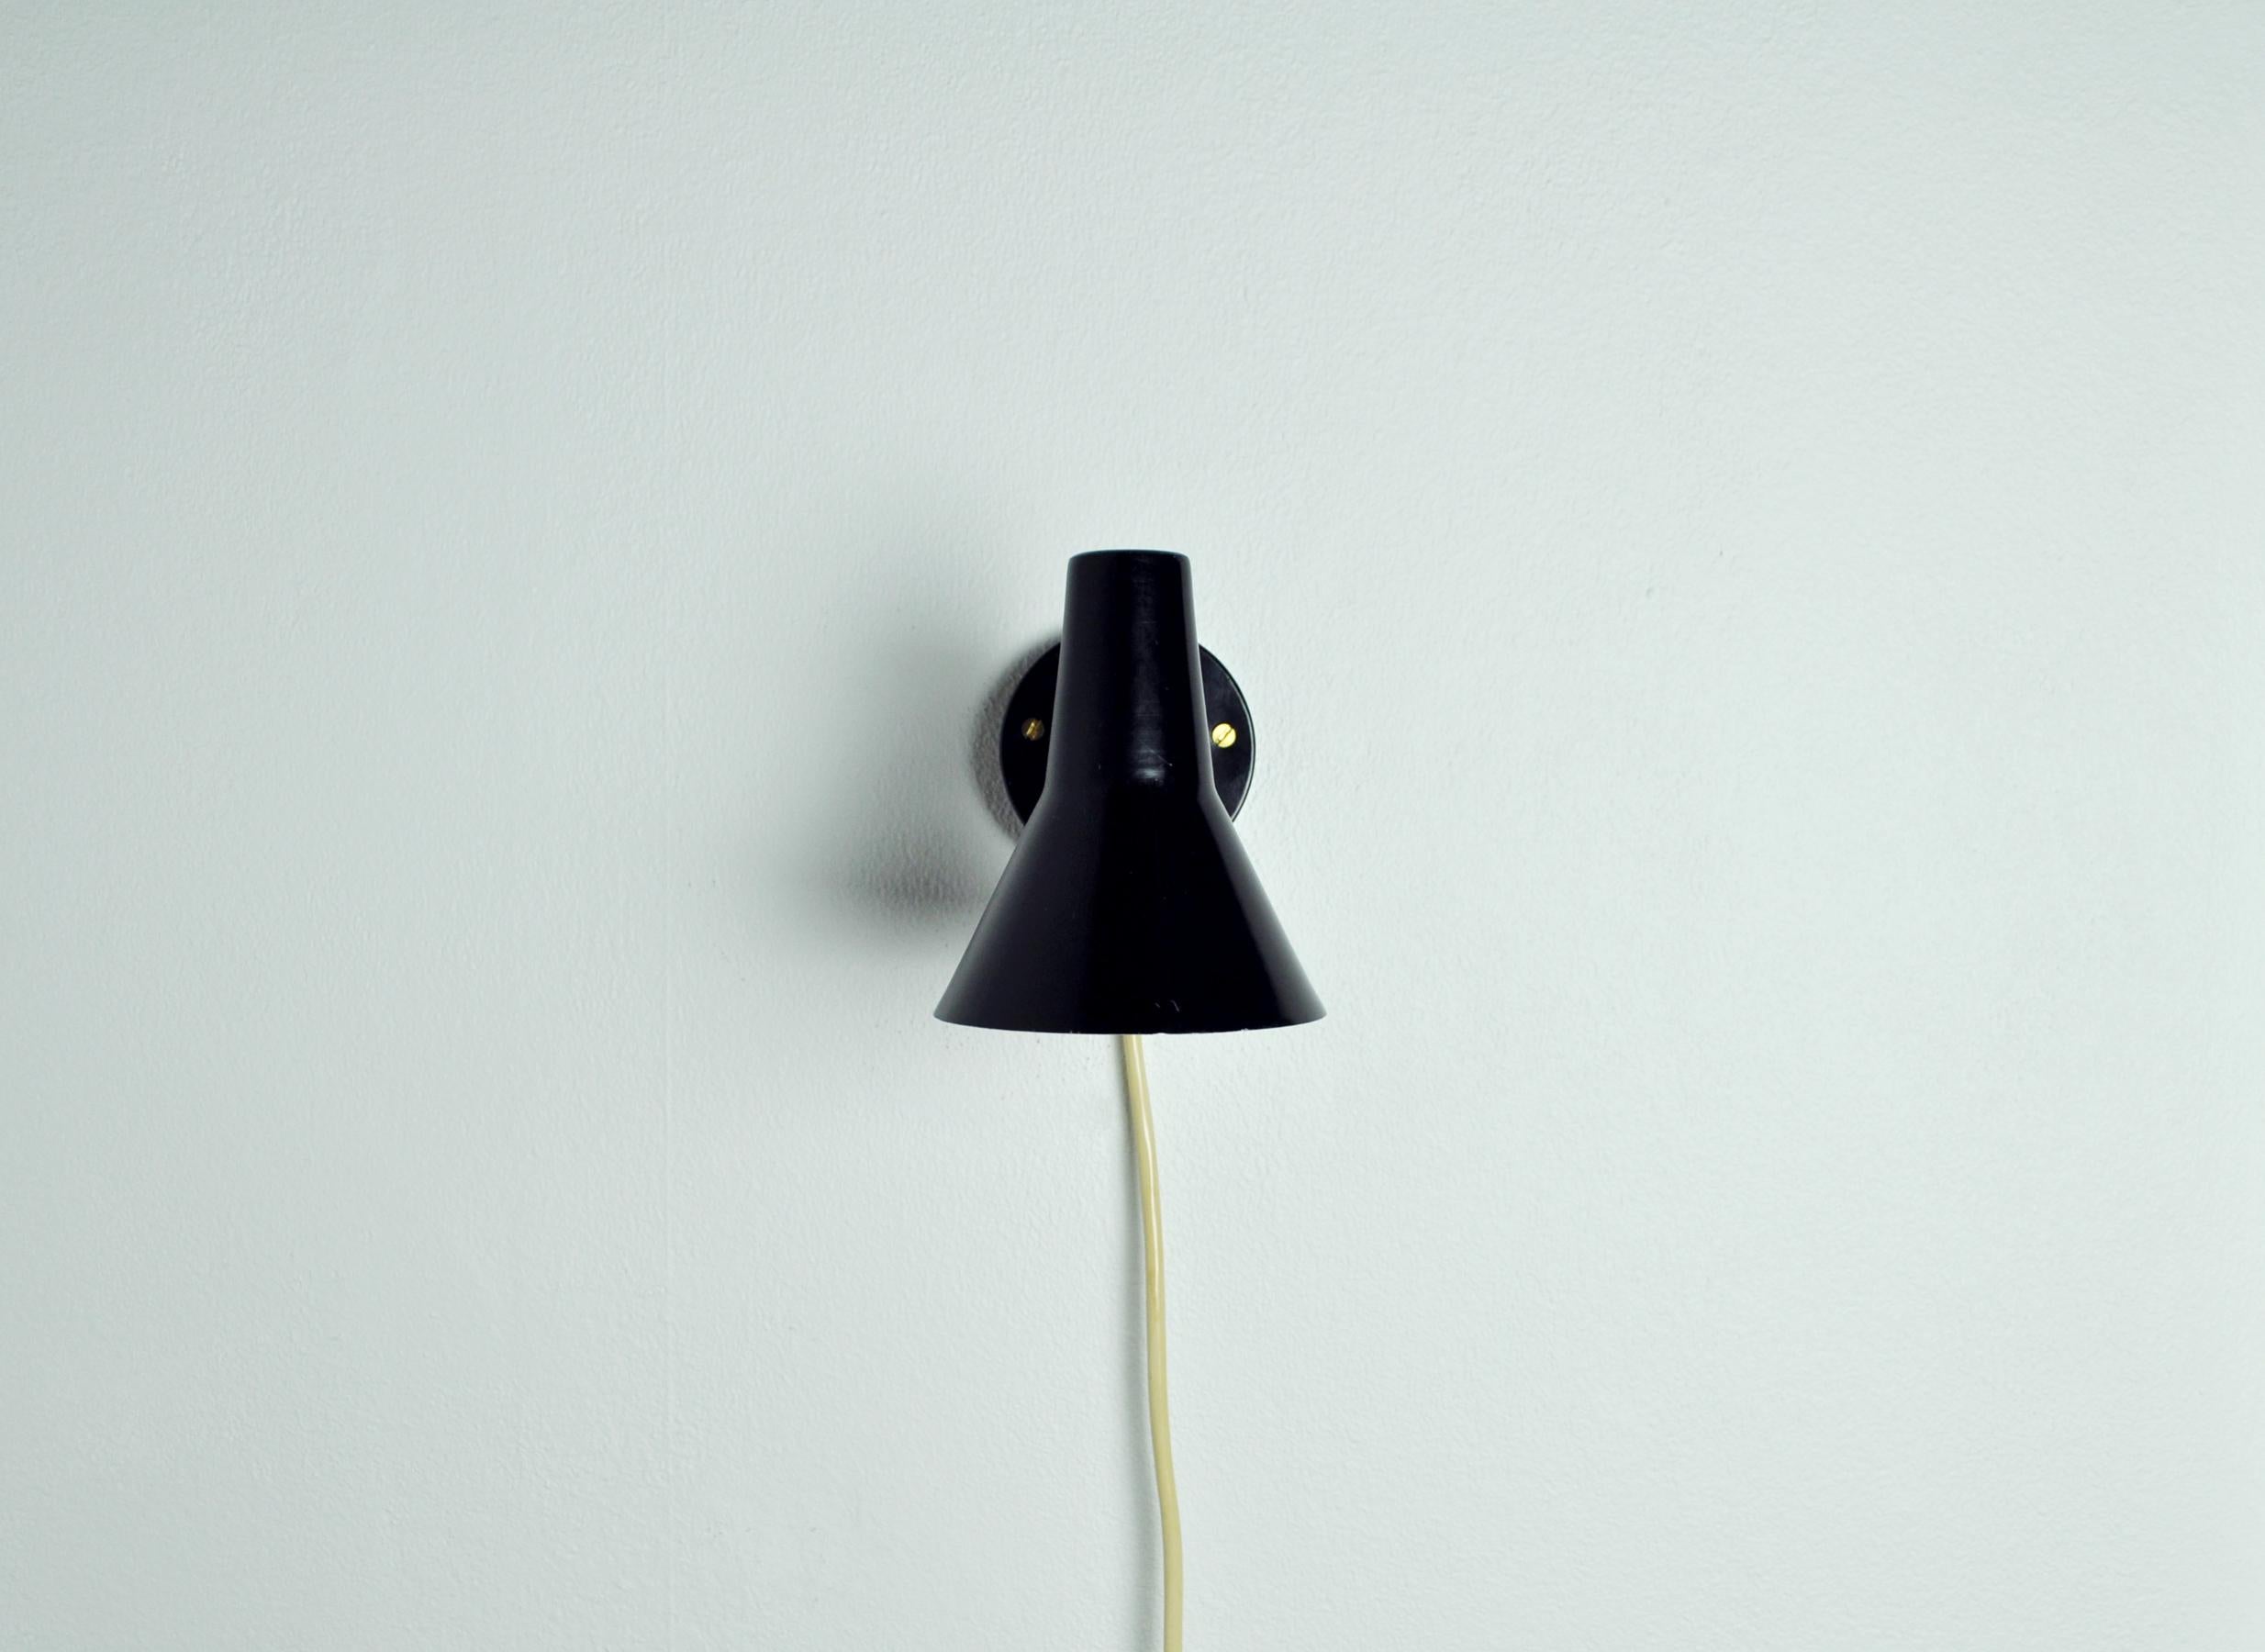 Scandinavian Modern Danish wall lamp with adjustable brass arm.
Black lacquered metal. Inner shade white.

Dimensions: 
Shade diameter 10 cm
Height 12 cm
Depth 18.5 cm.